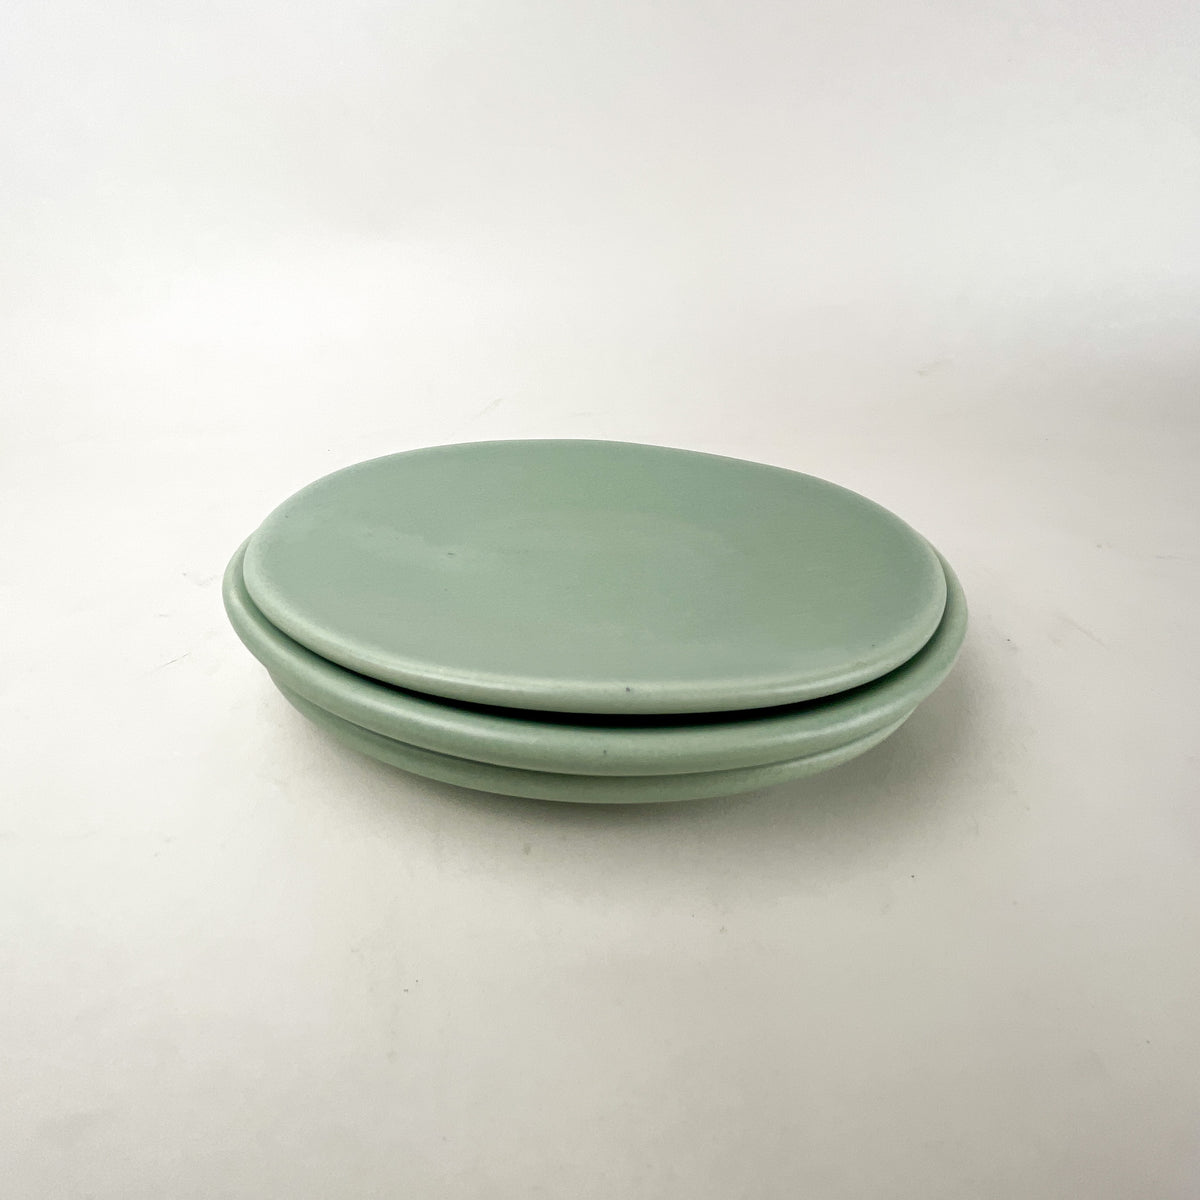 <!--3500--!>Tableware - Shell Toast Plate